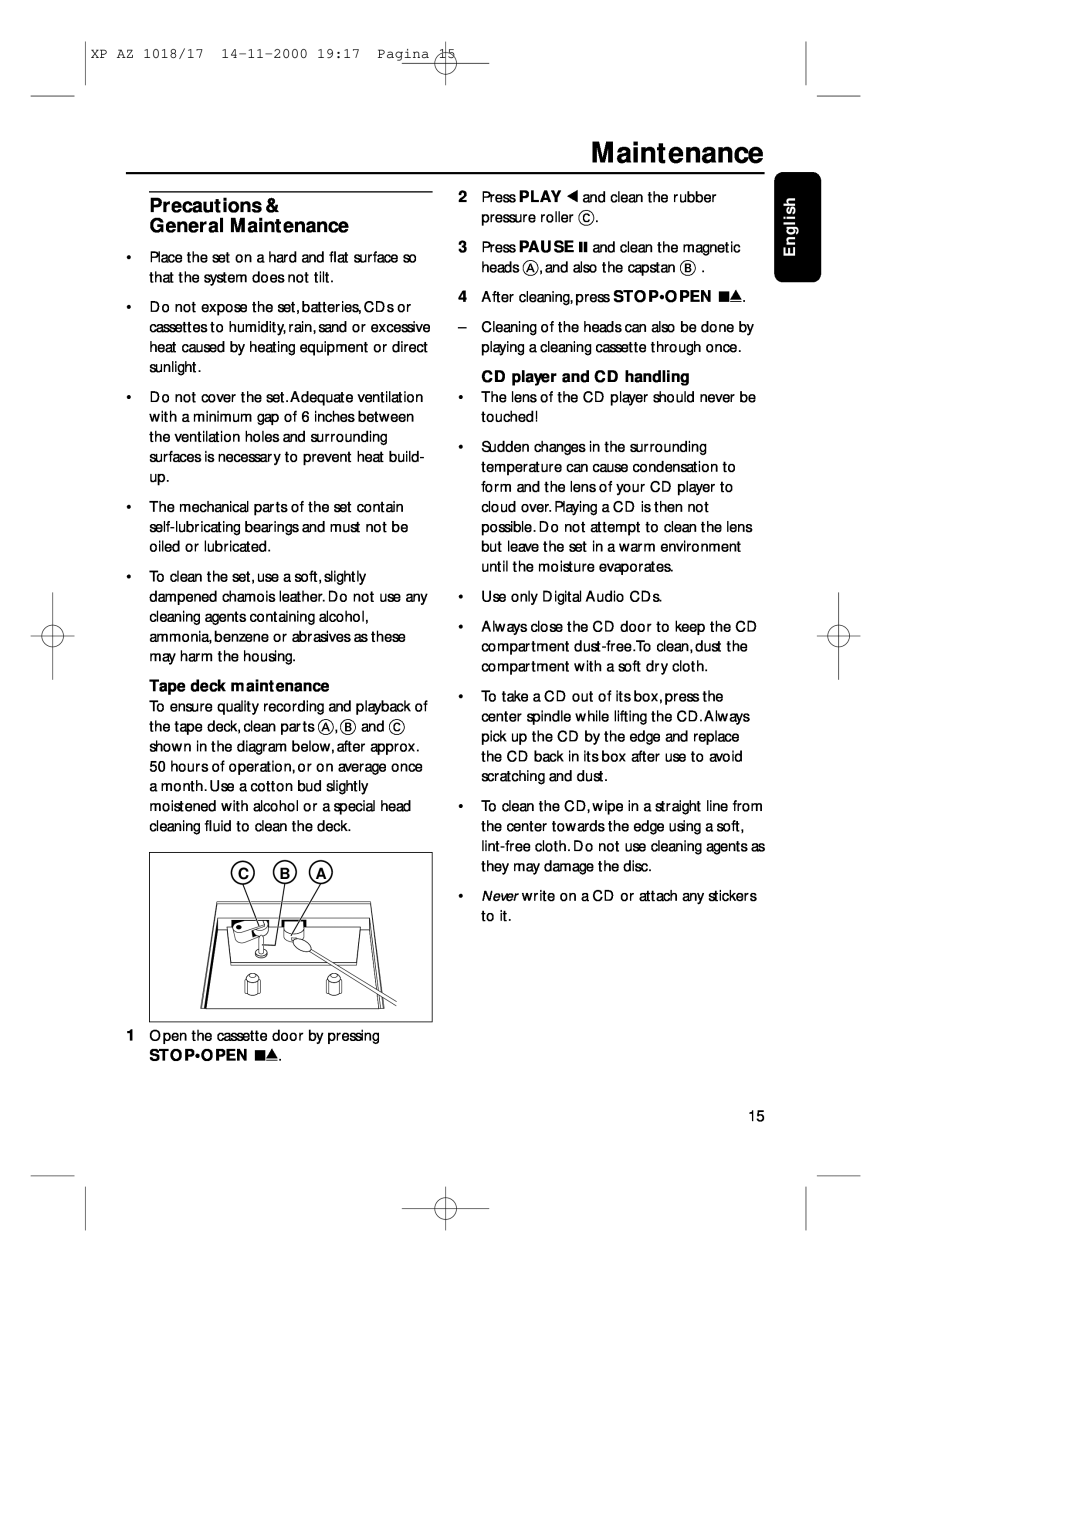 Philips 1018 manual Precautions General Maintenance, C B A, Tape deck maintenance, CD player and CD handling, English 